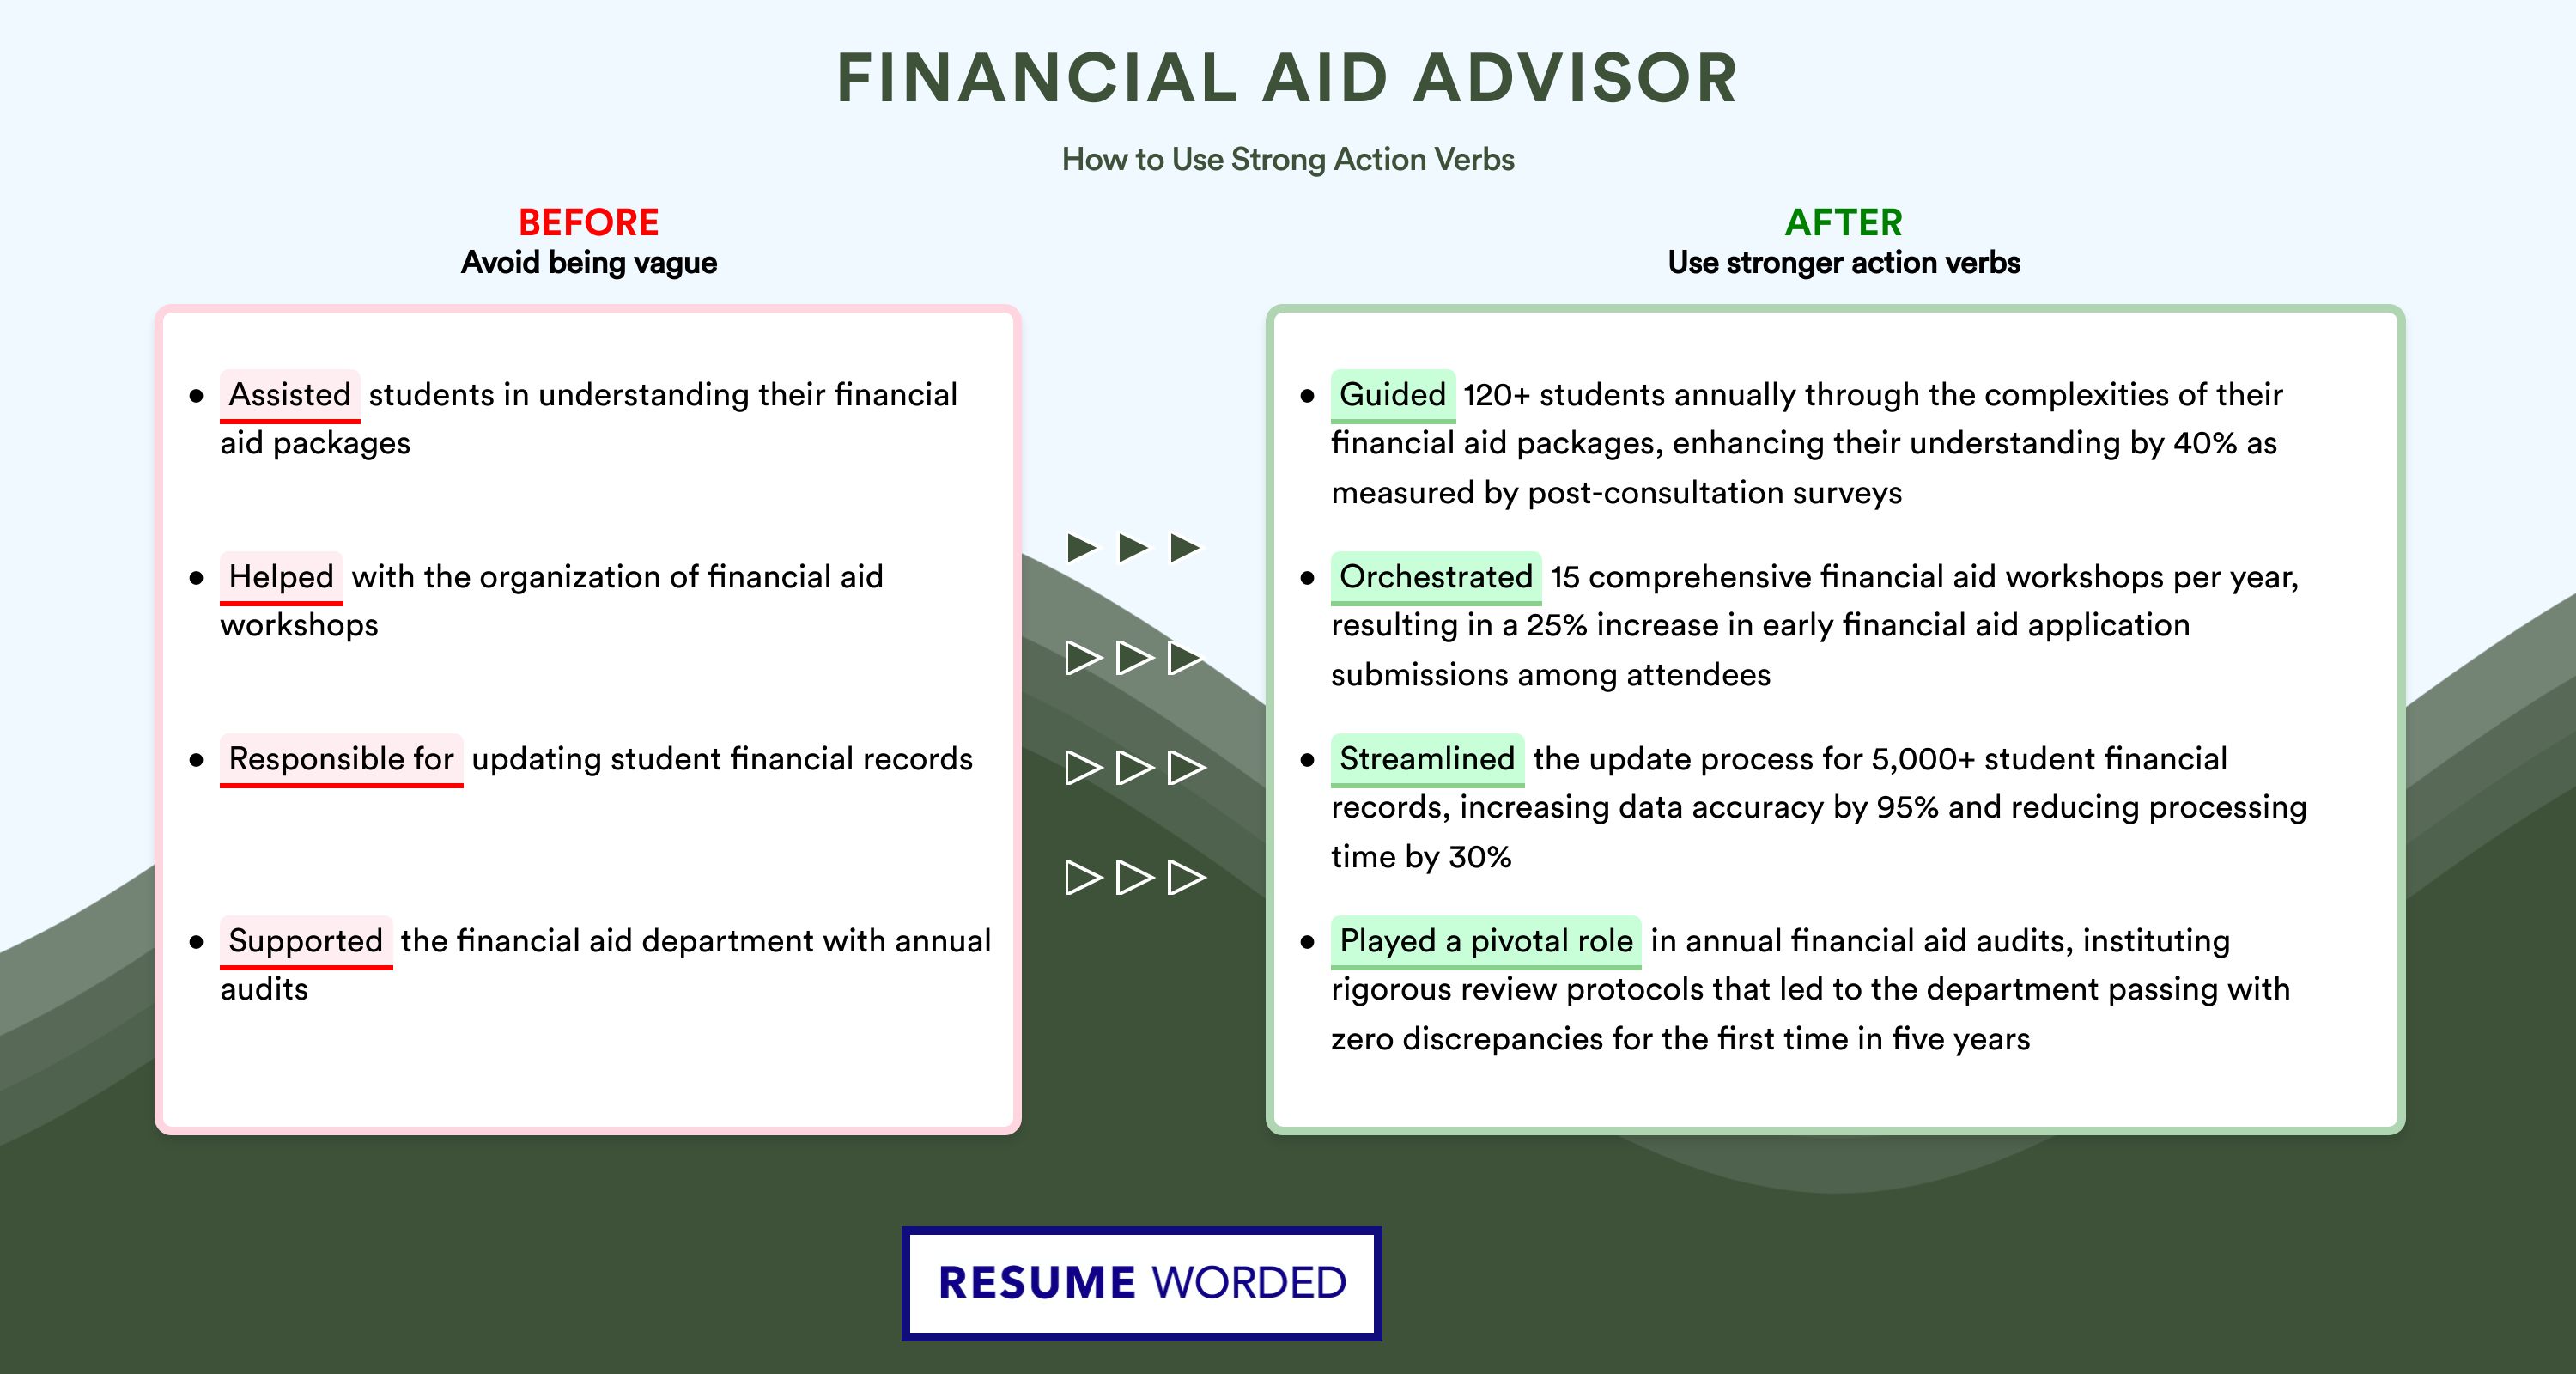 Action Verbs for Financial Aid Advisor